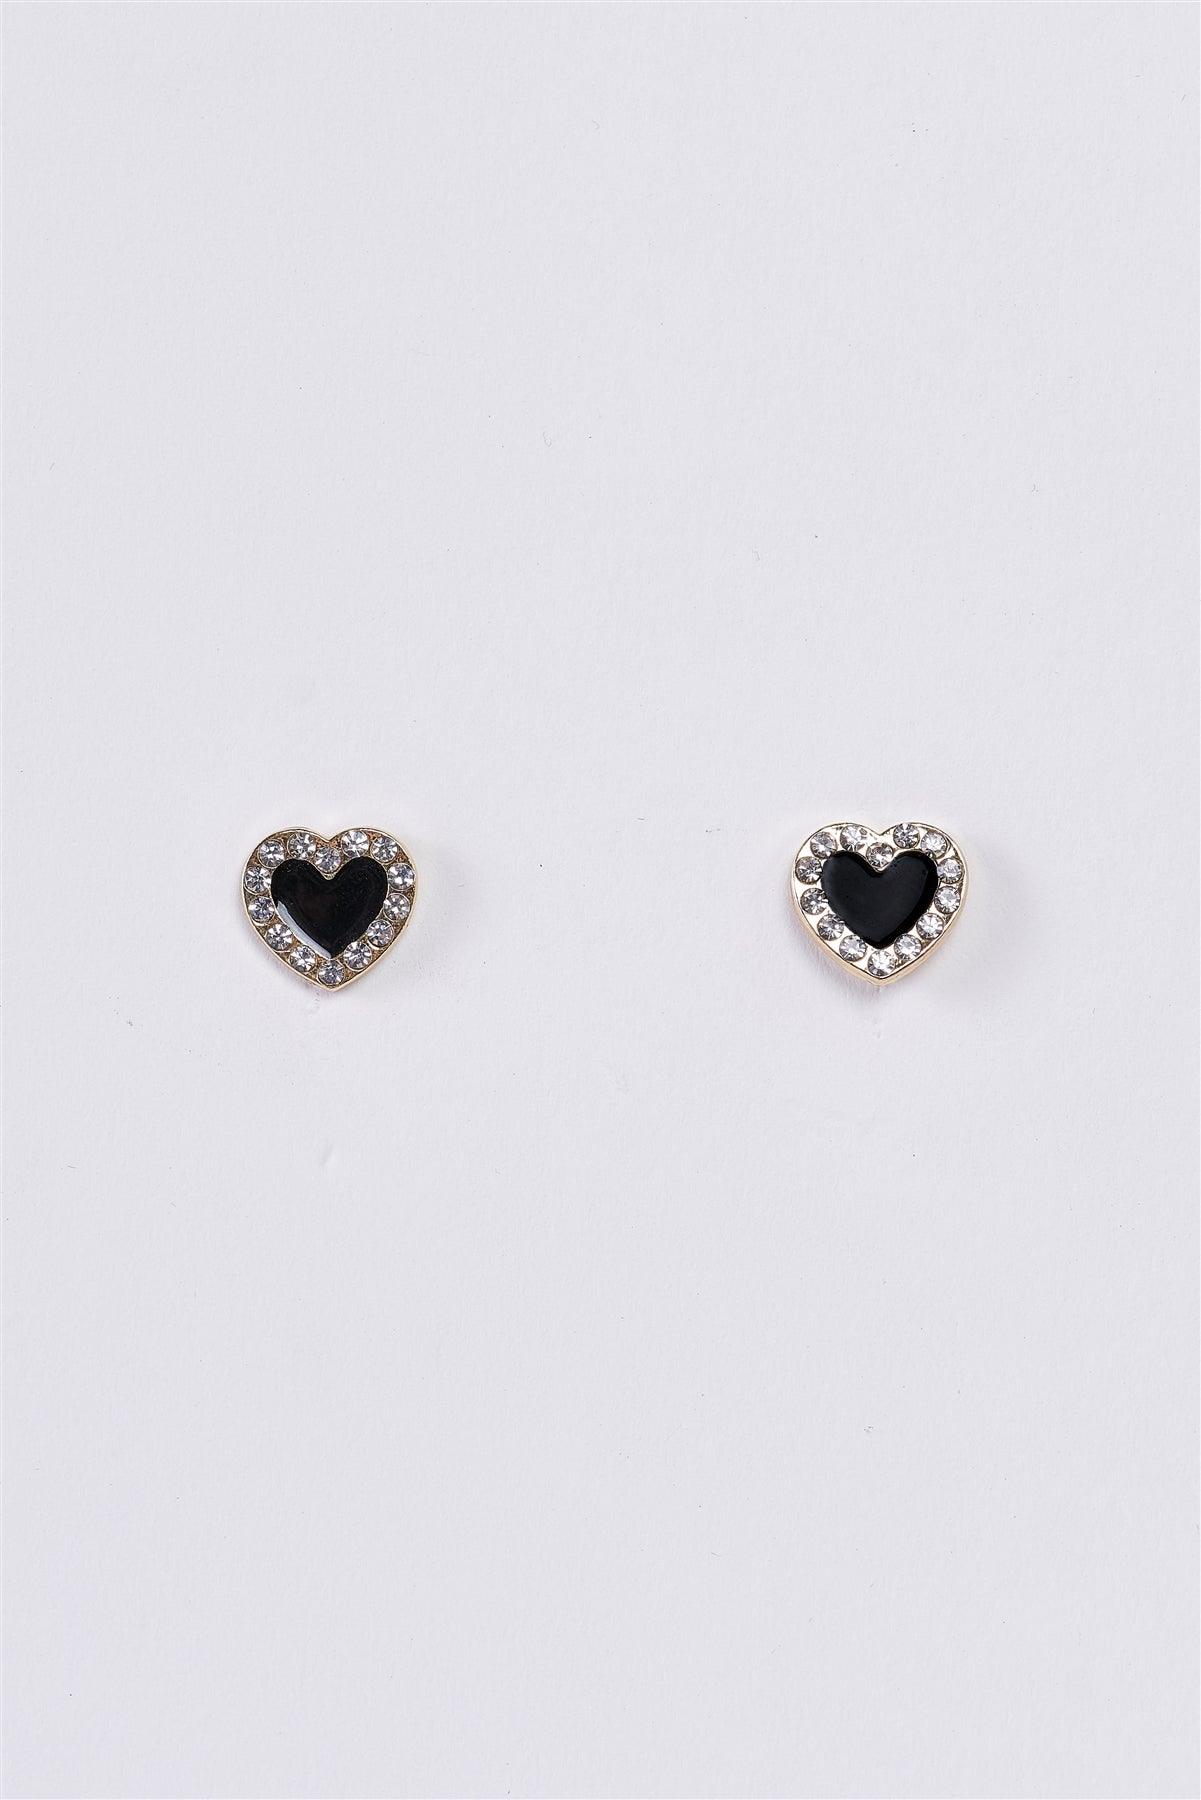 Small Gold & Black Faux Diamonds Incrustation Heart Shaped Stud Earrings /3 Pairs